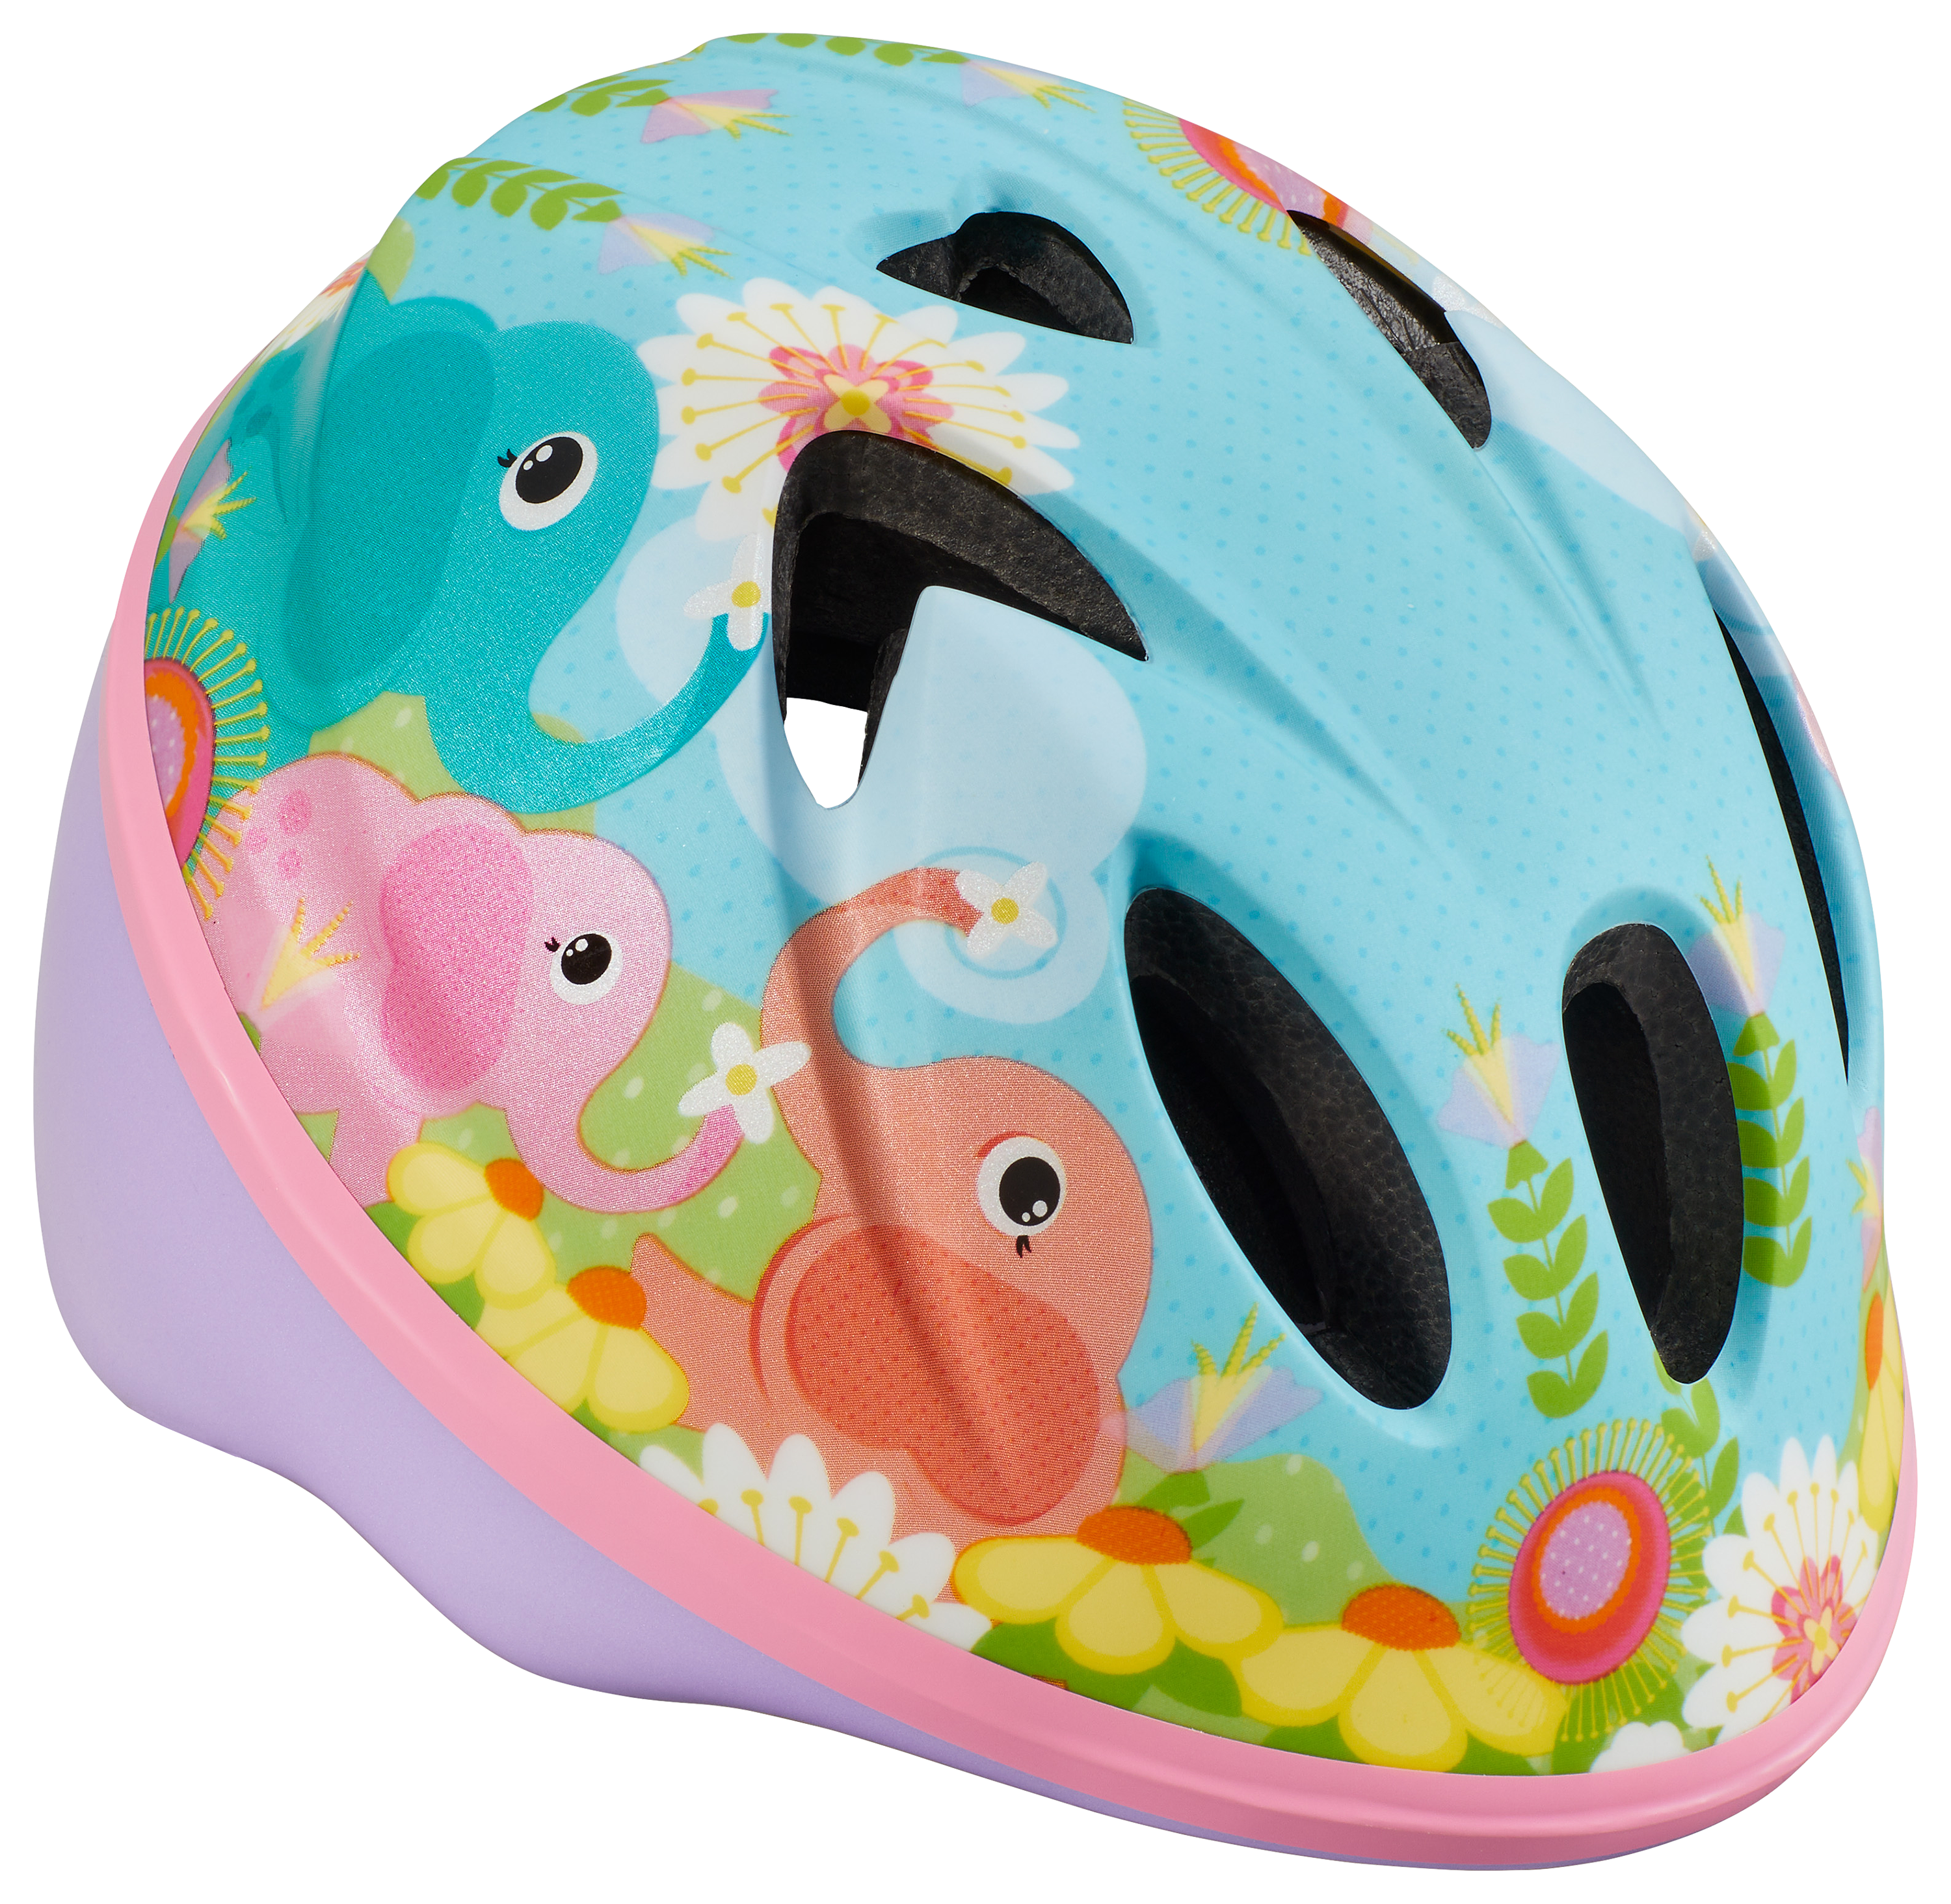 Schwinn Classic Elephant Bike Helmet for Babies or Toddlers